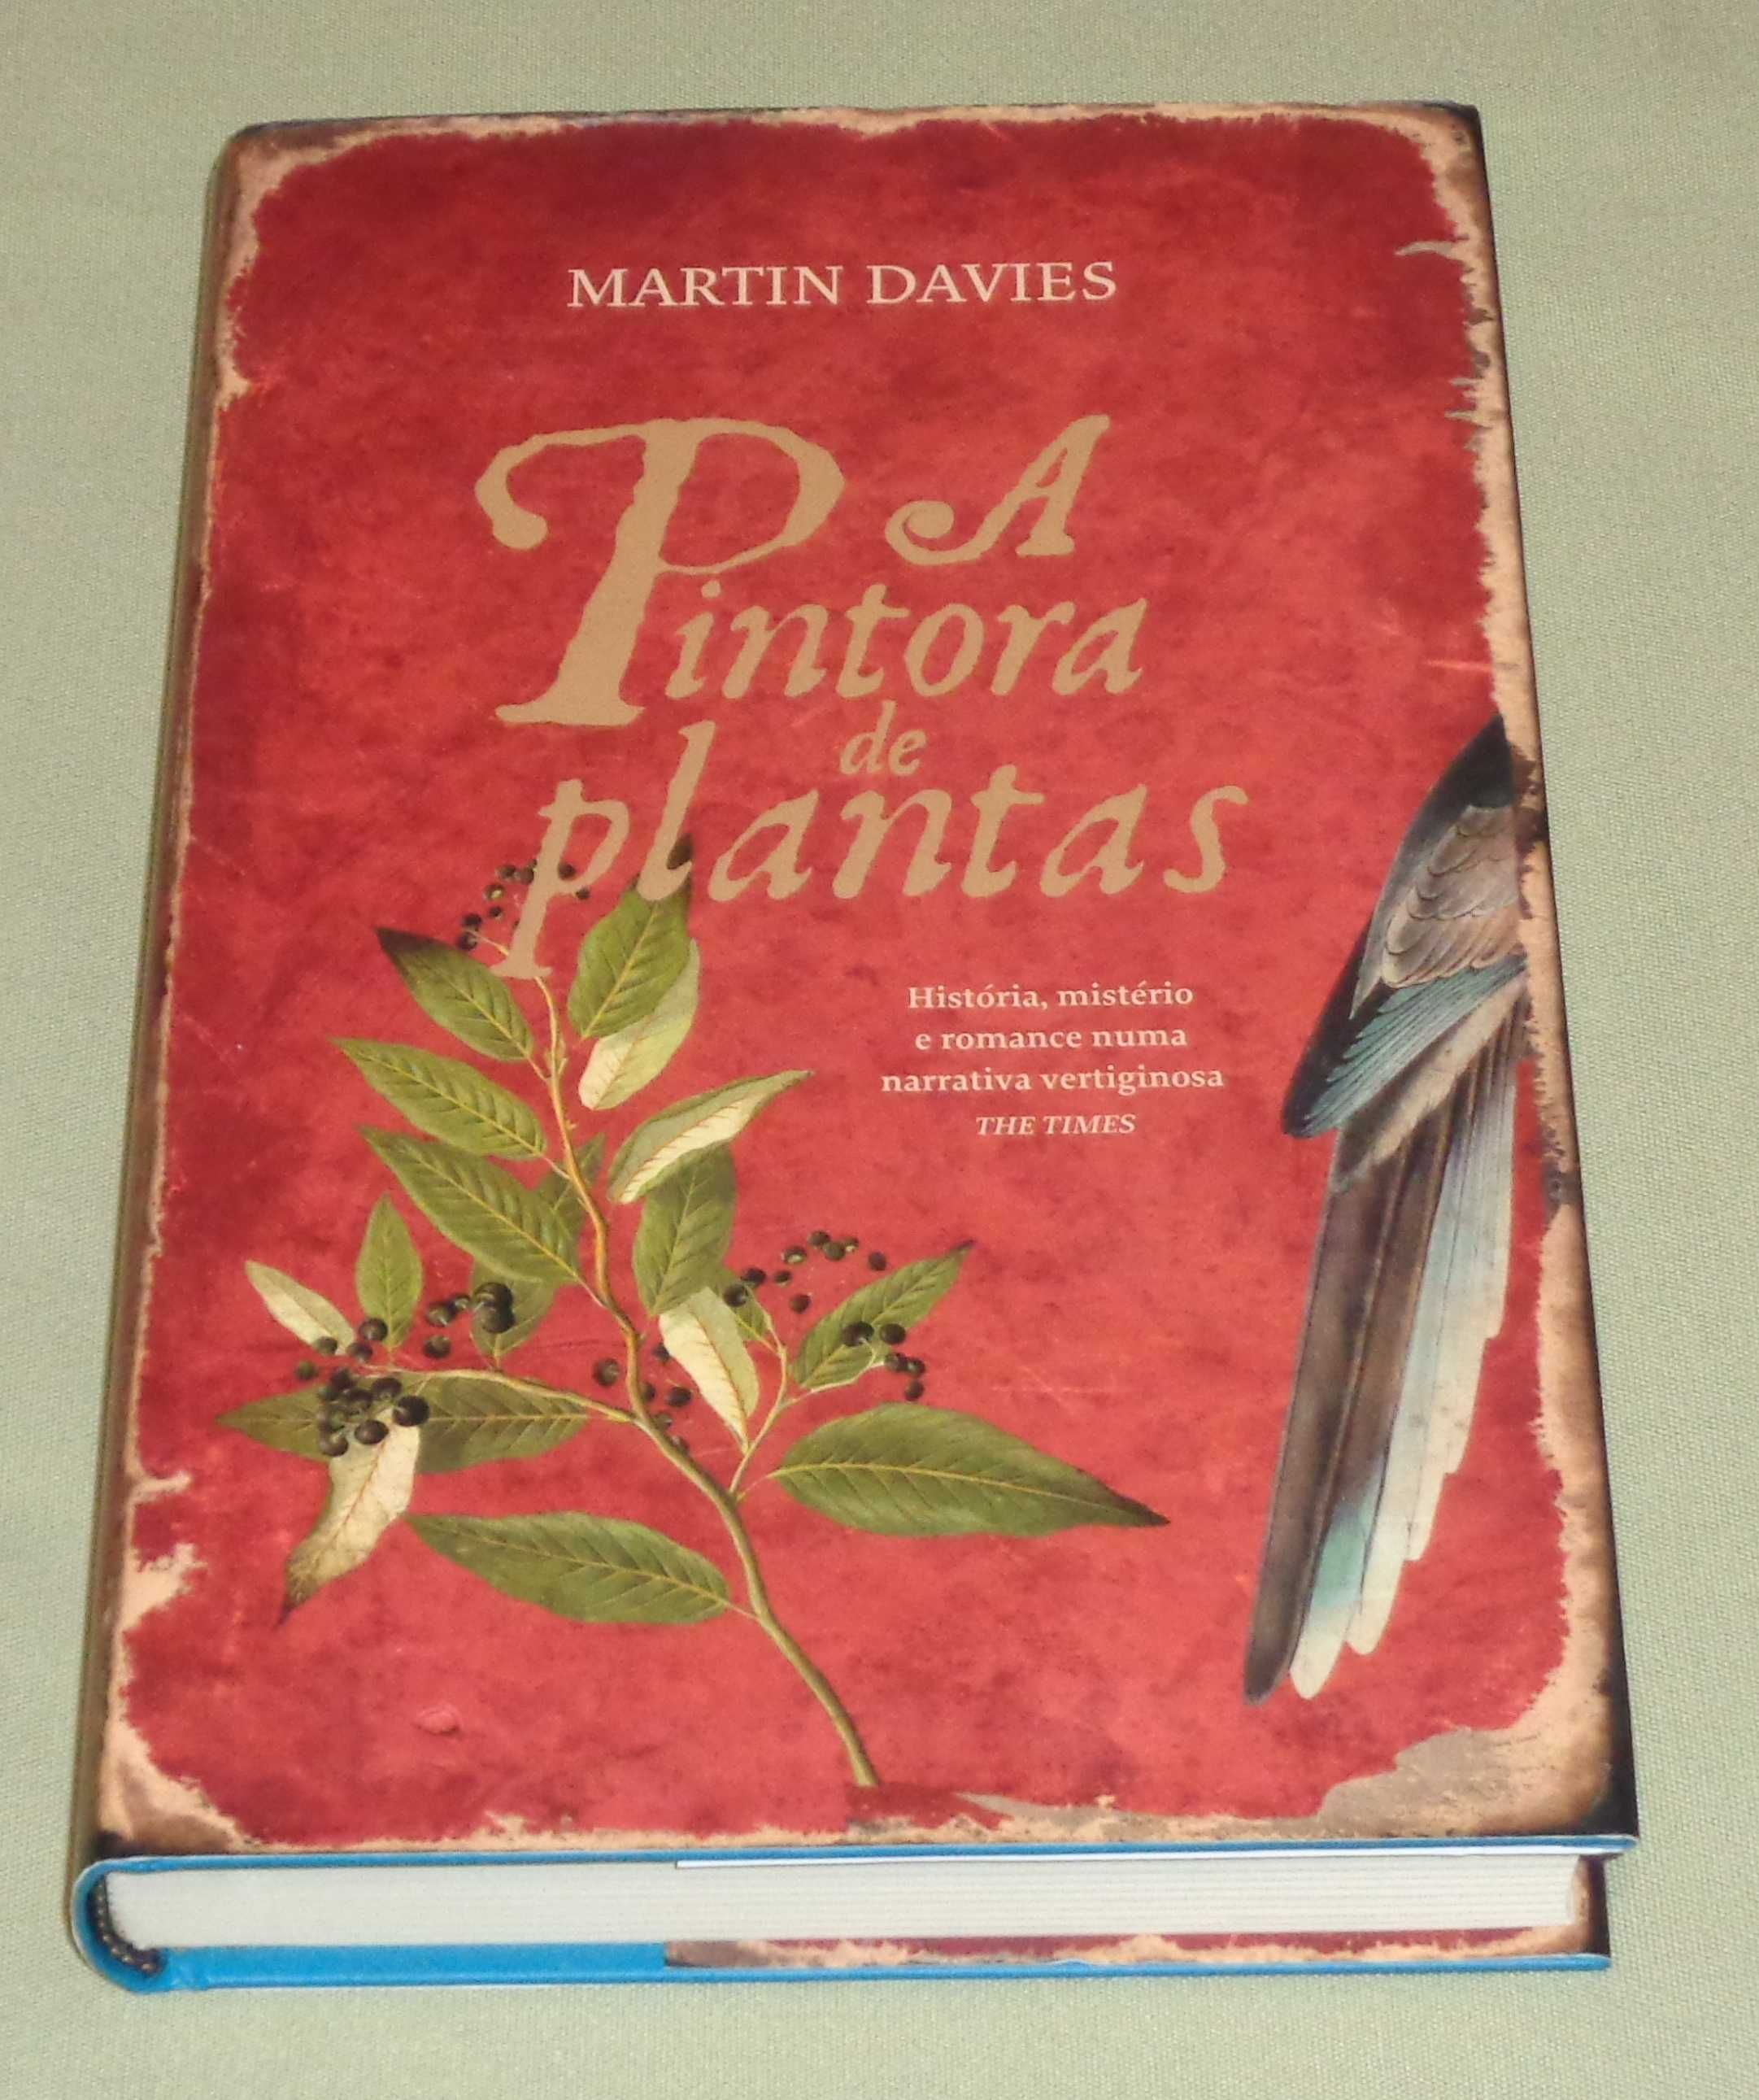 A Pintora de Plantas de Martin Davies